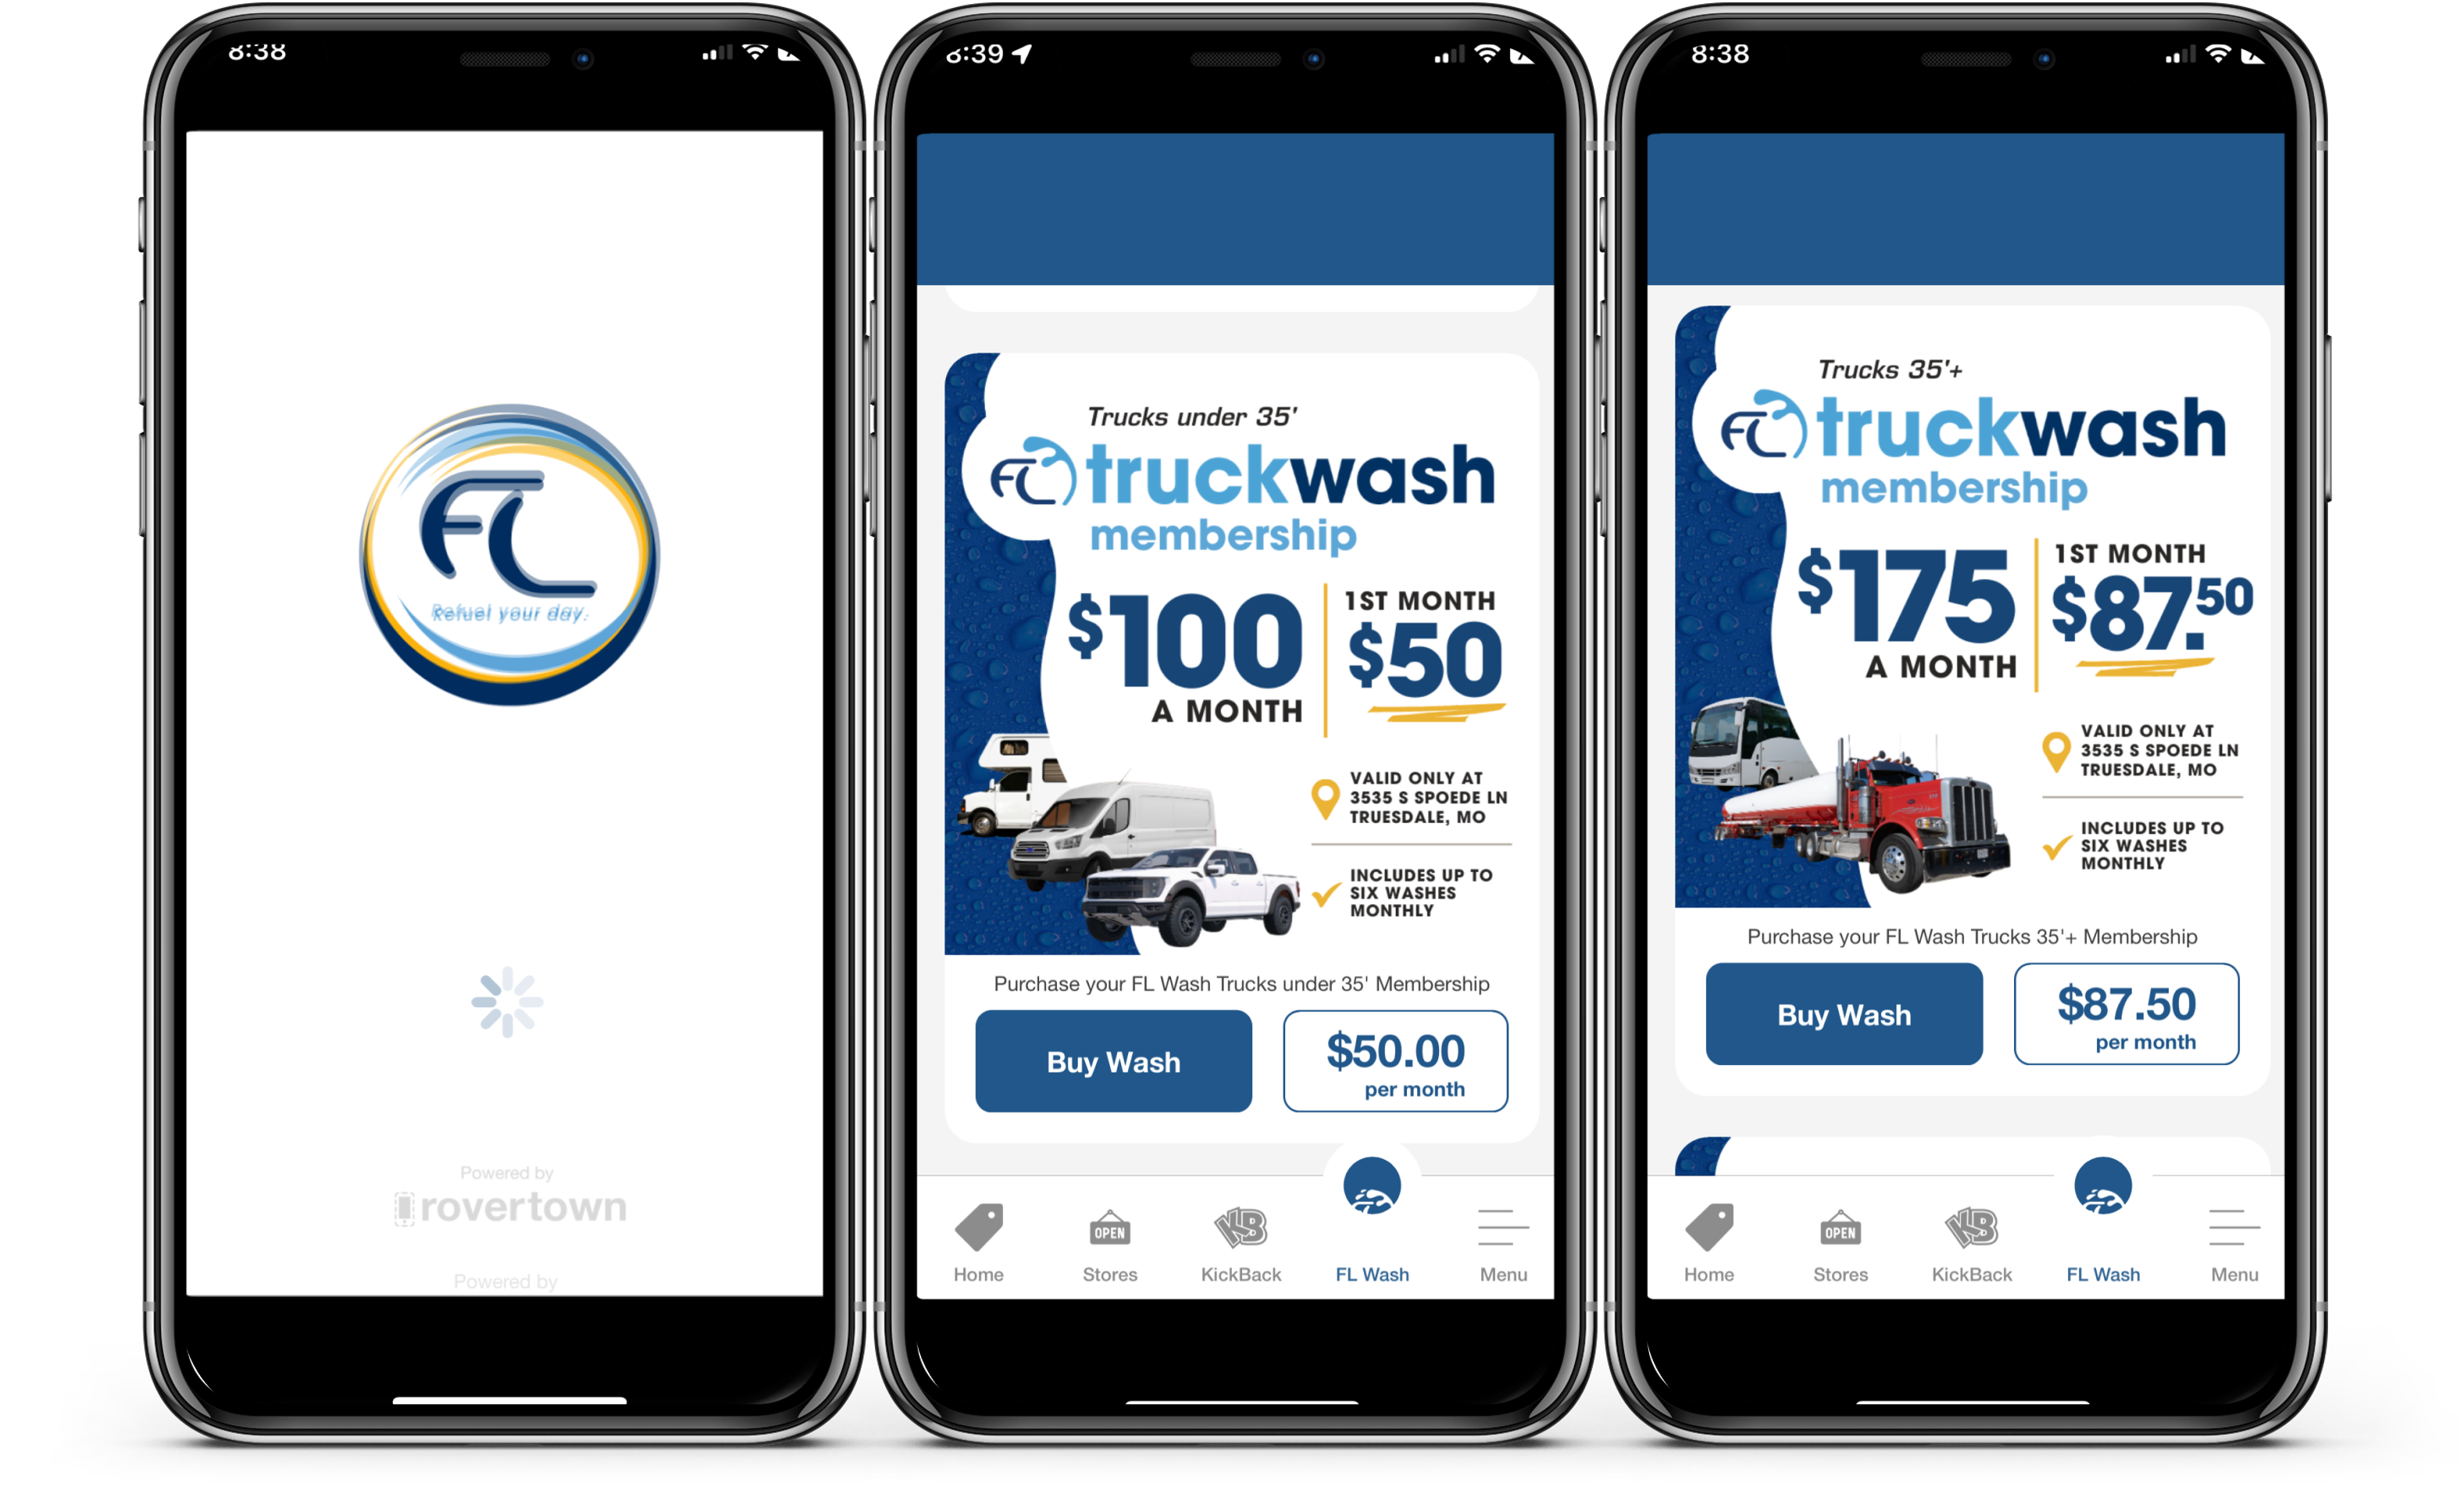 FastLane truck wash subscription plans